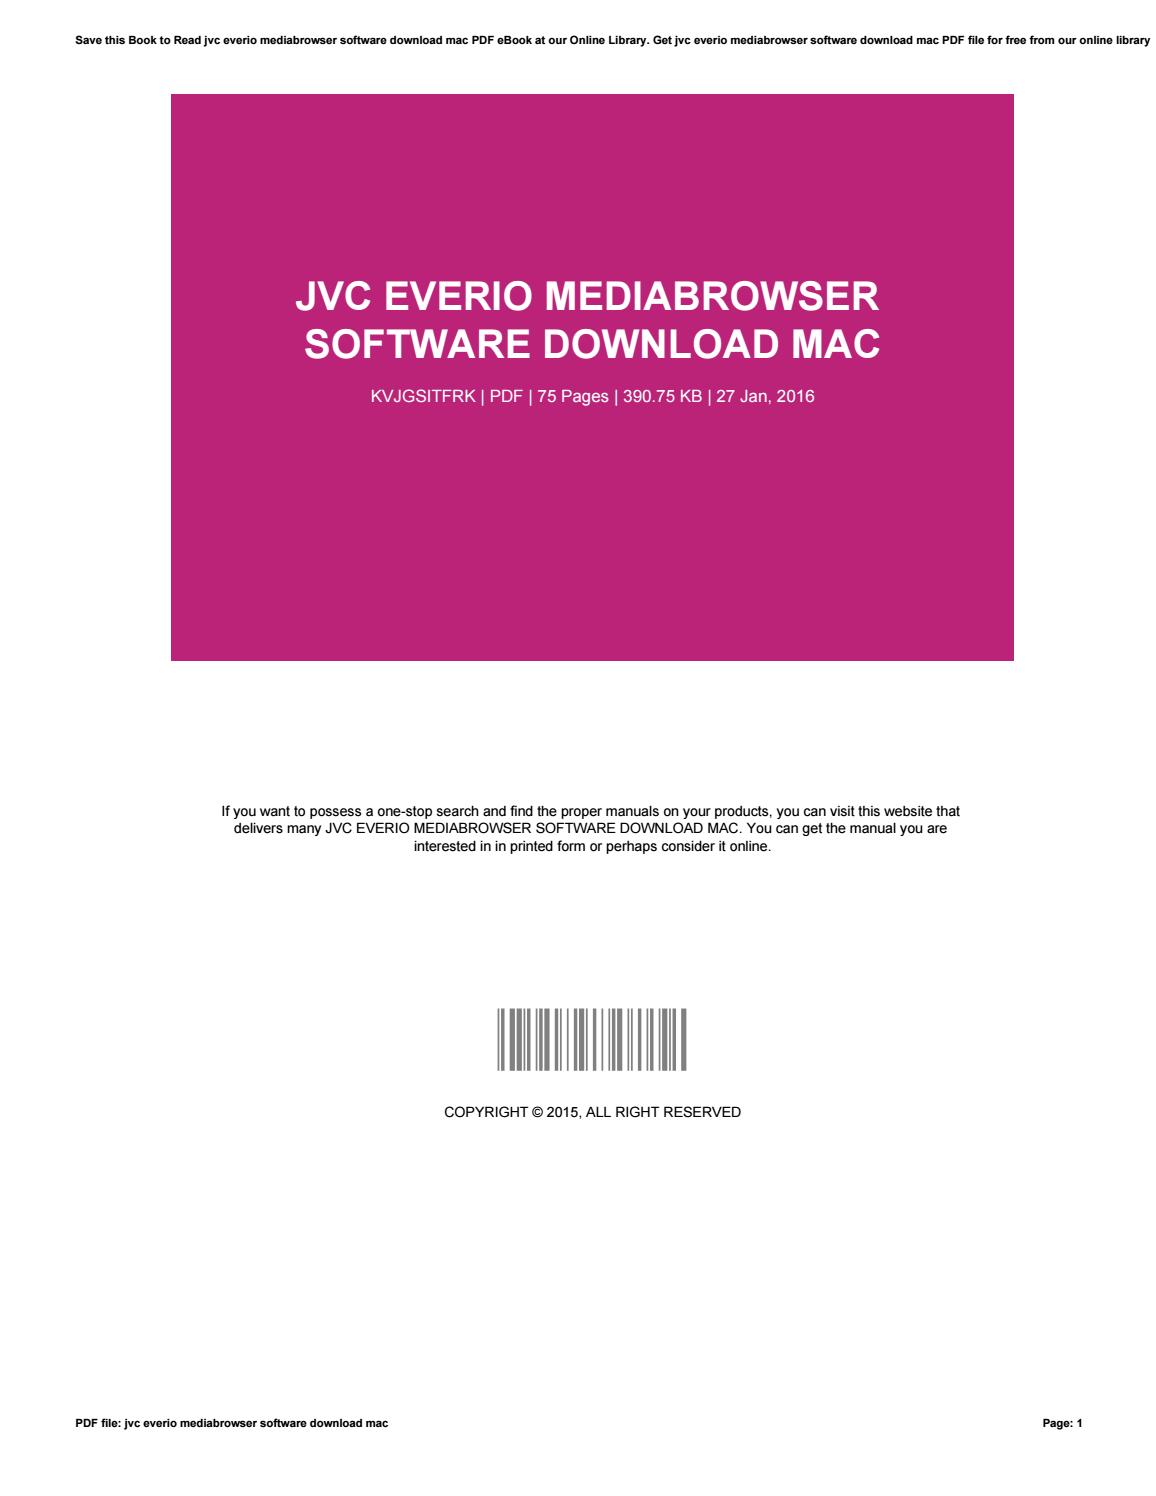 Download jvc everio camcorder software